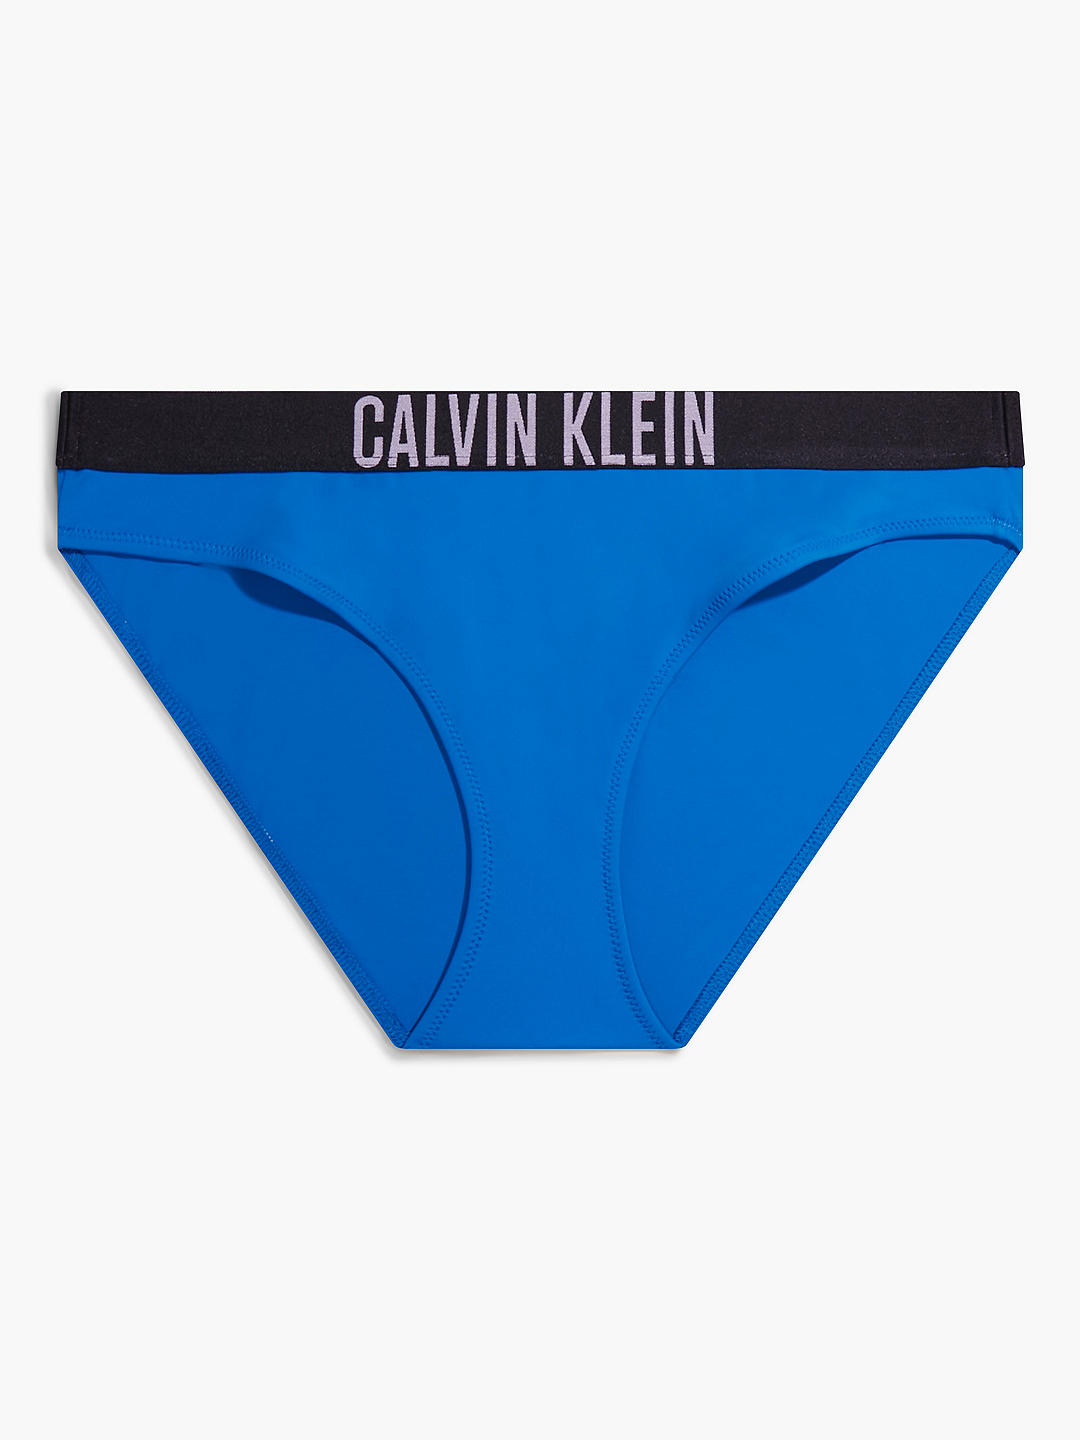 Calvin Klein Intense Power Classic Bikini Bottoms, Dynamic Blue